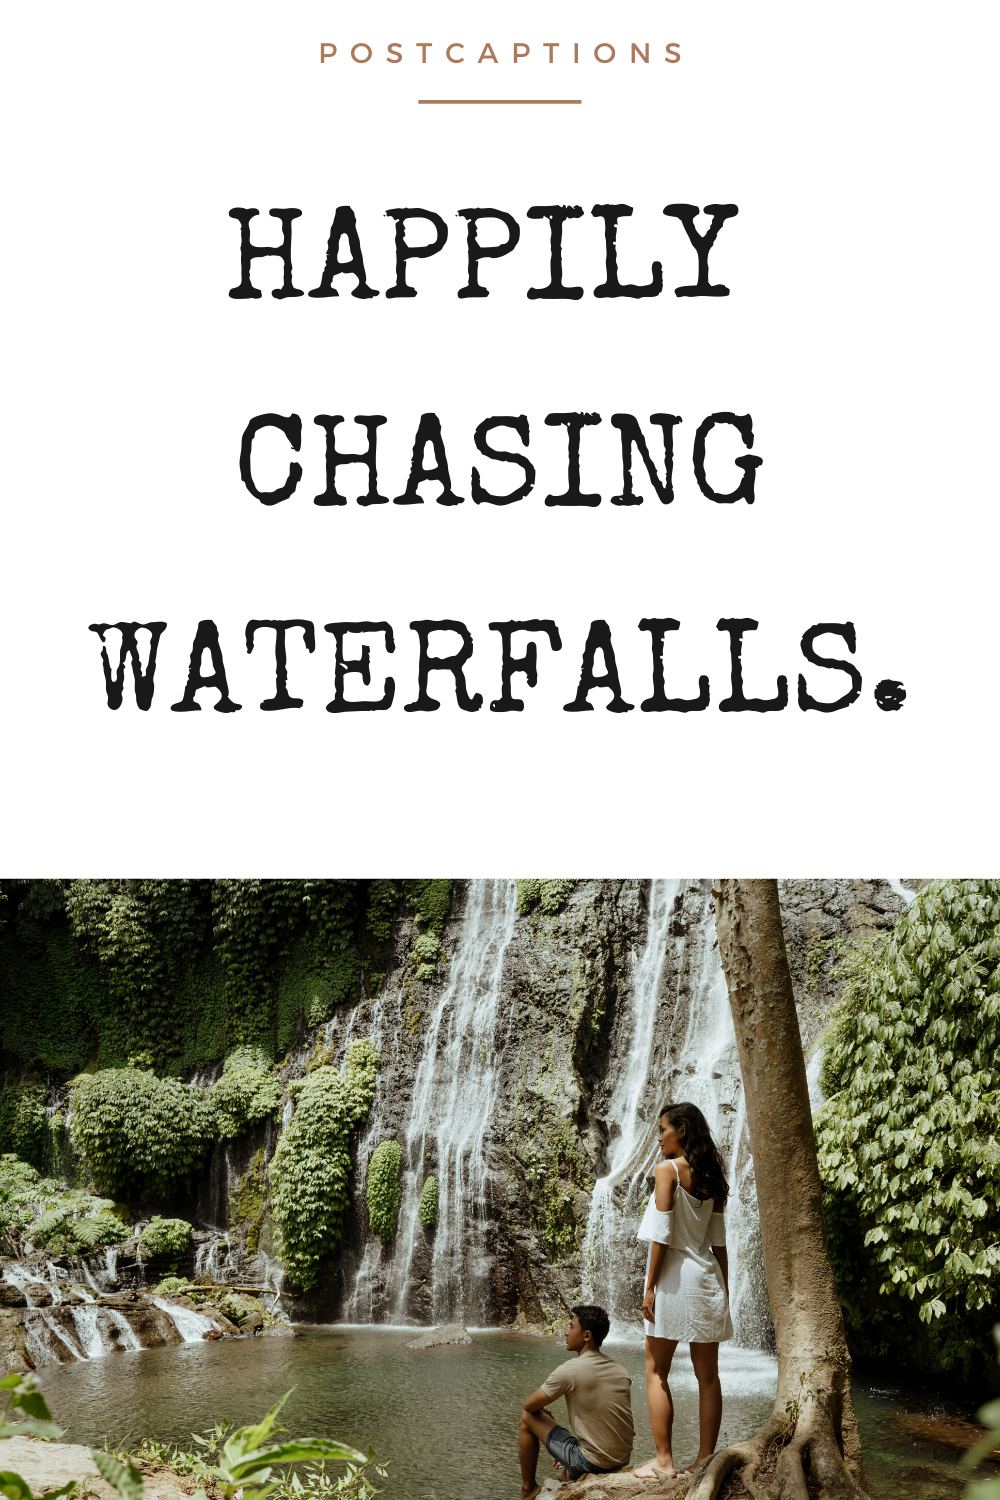 Short waterfall captions